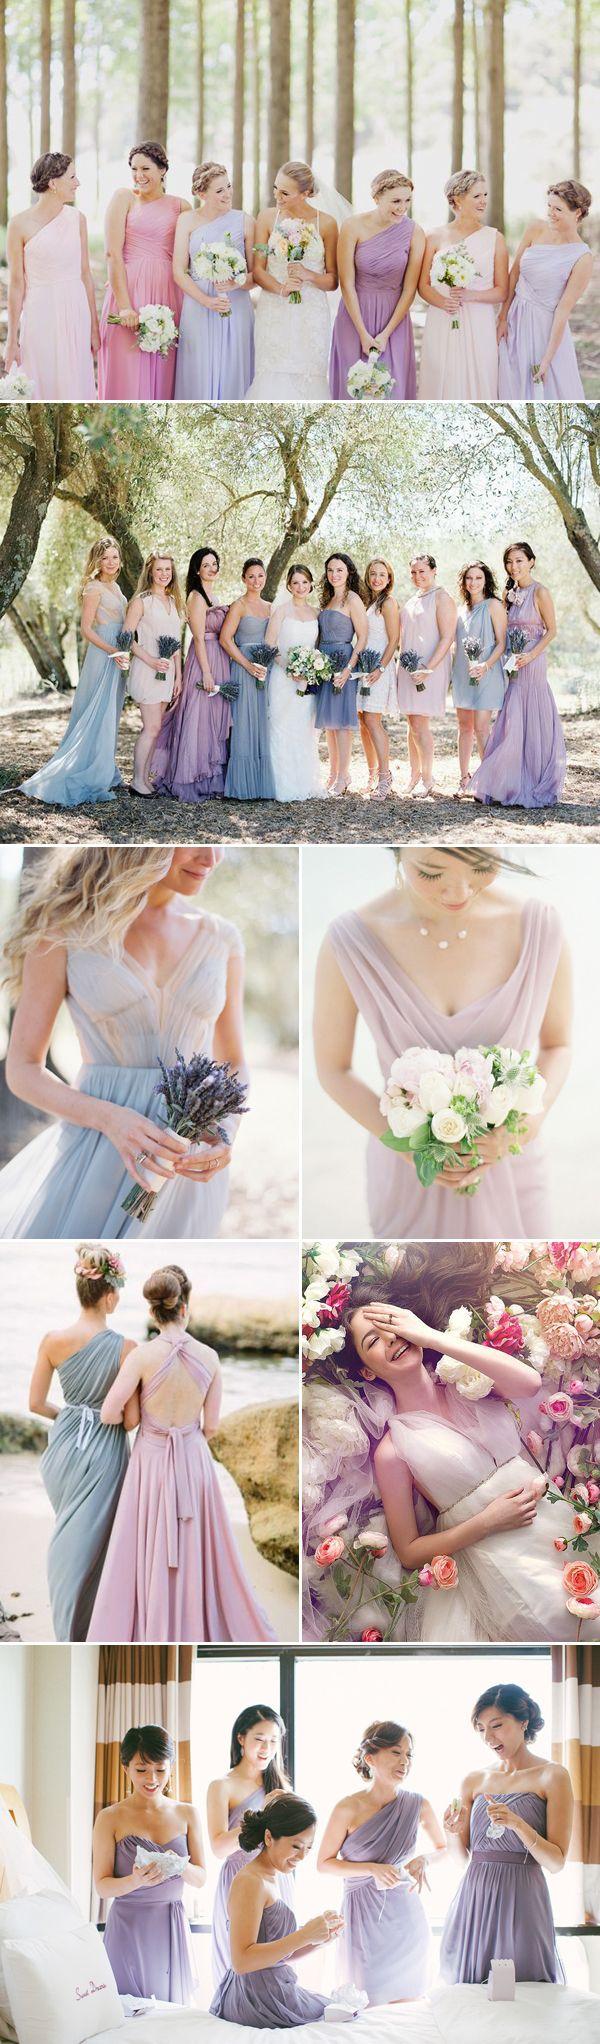 زفاف - Top 8 Bridesmaid Dress Trends For Summer 2014